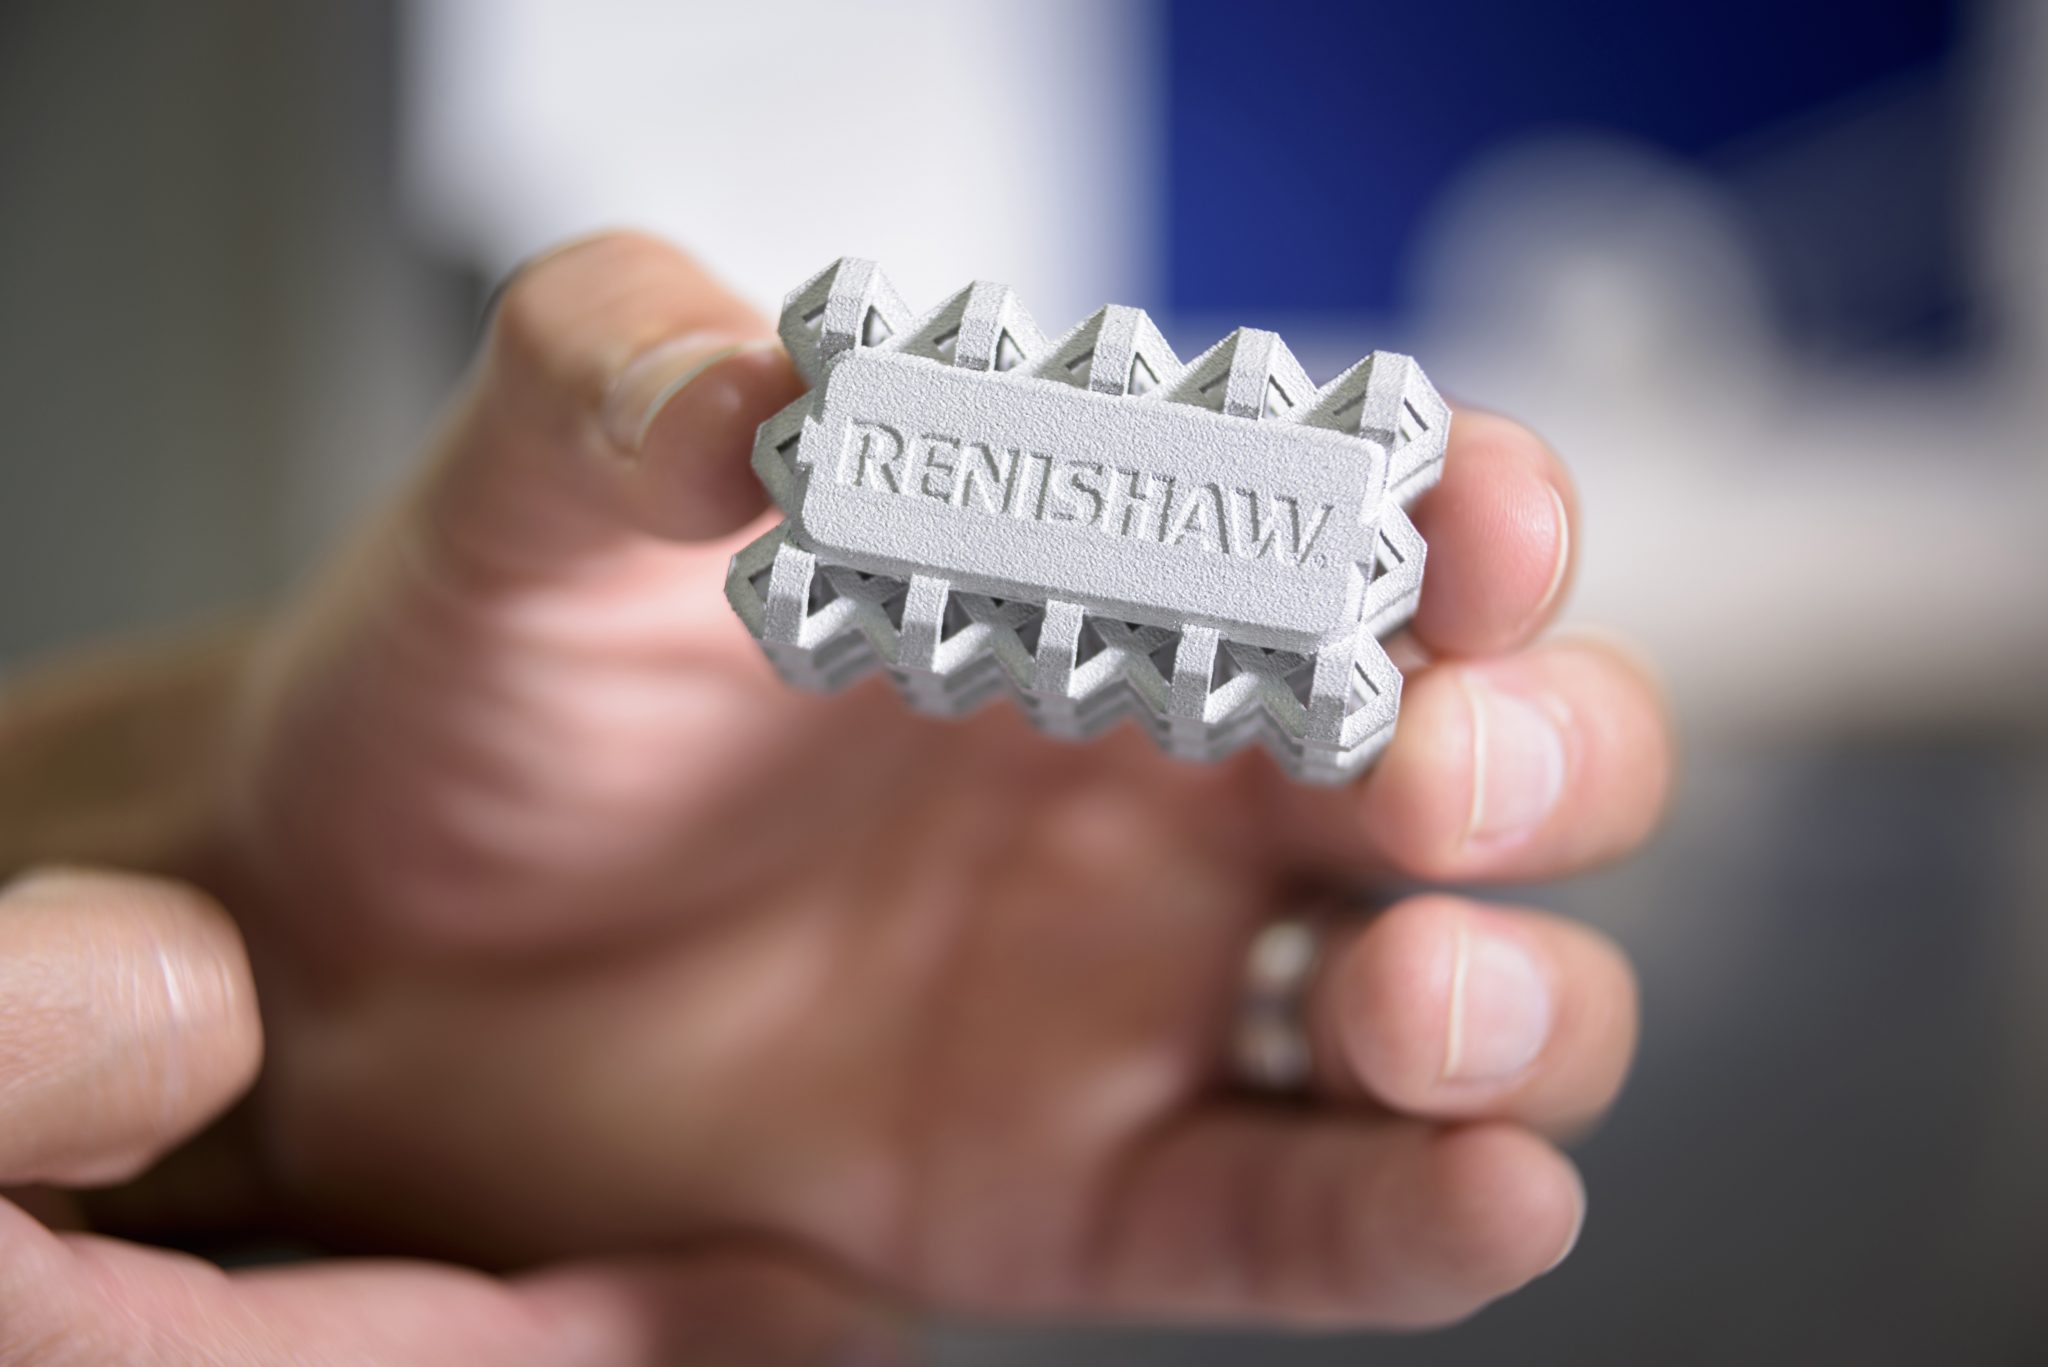 Renishaw metal 3D printed part. Courtesy of Aeromet (c) Monty Rakusen